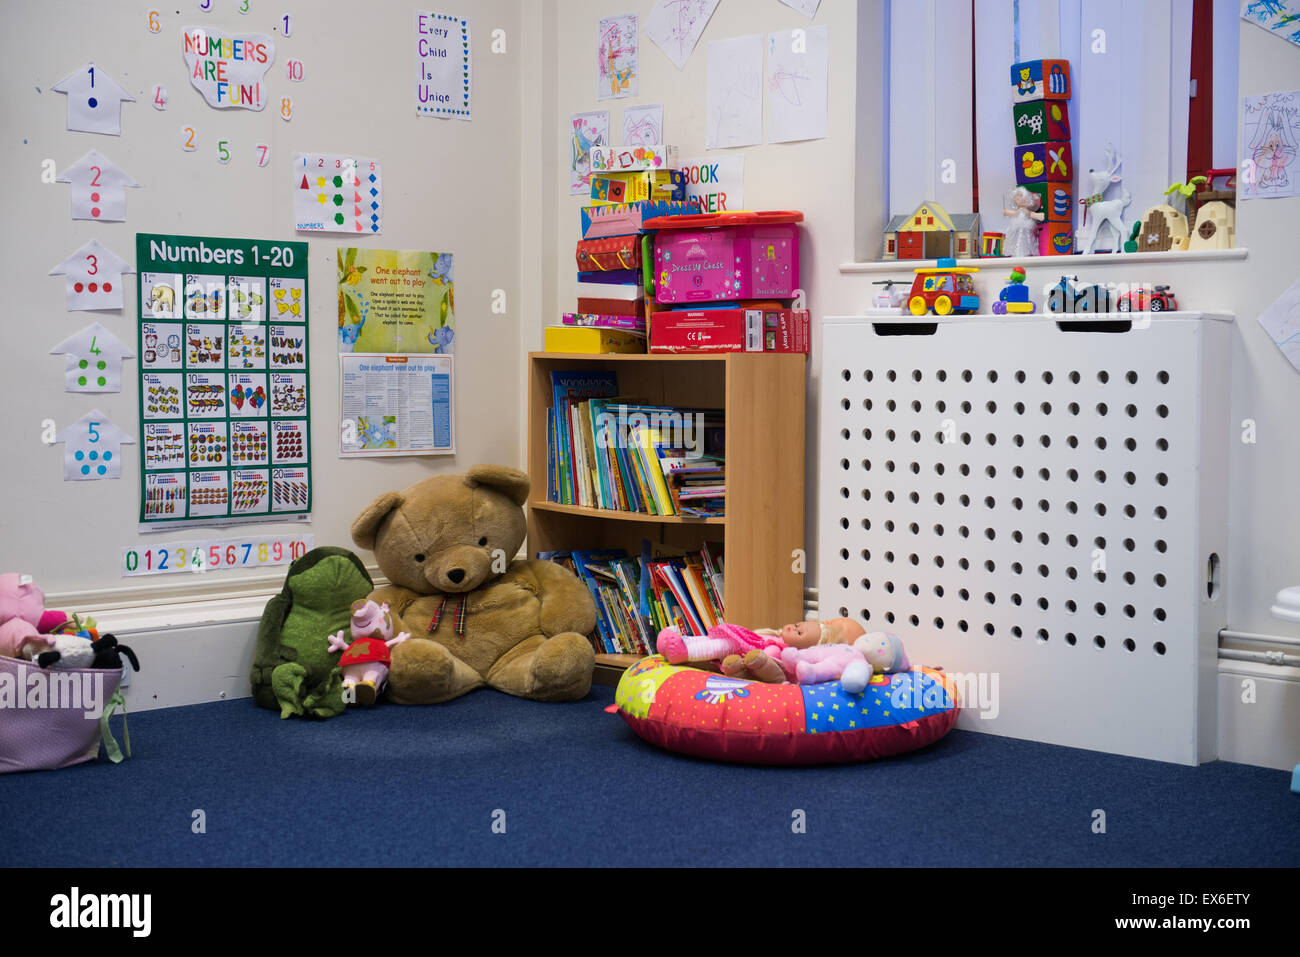 Children's playroom in childcare provider Stock Photo